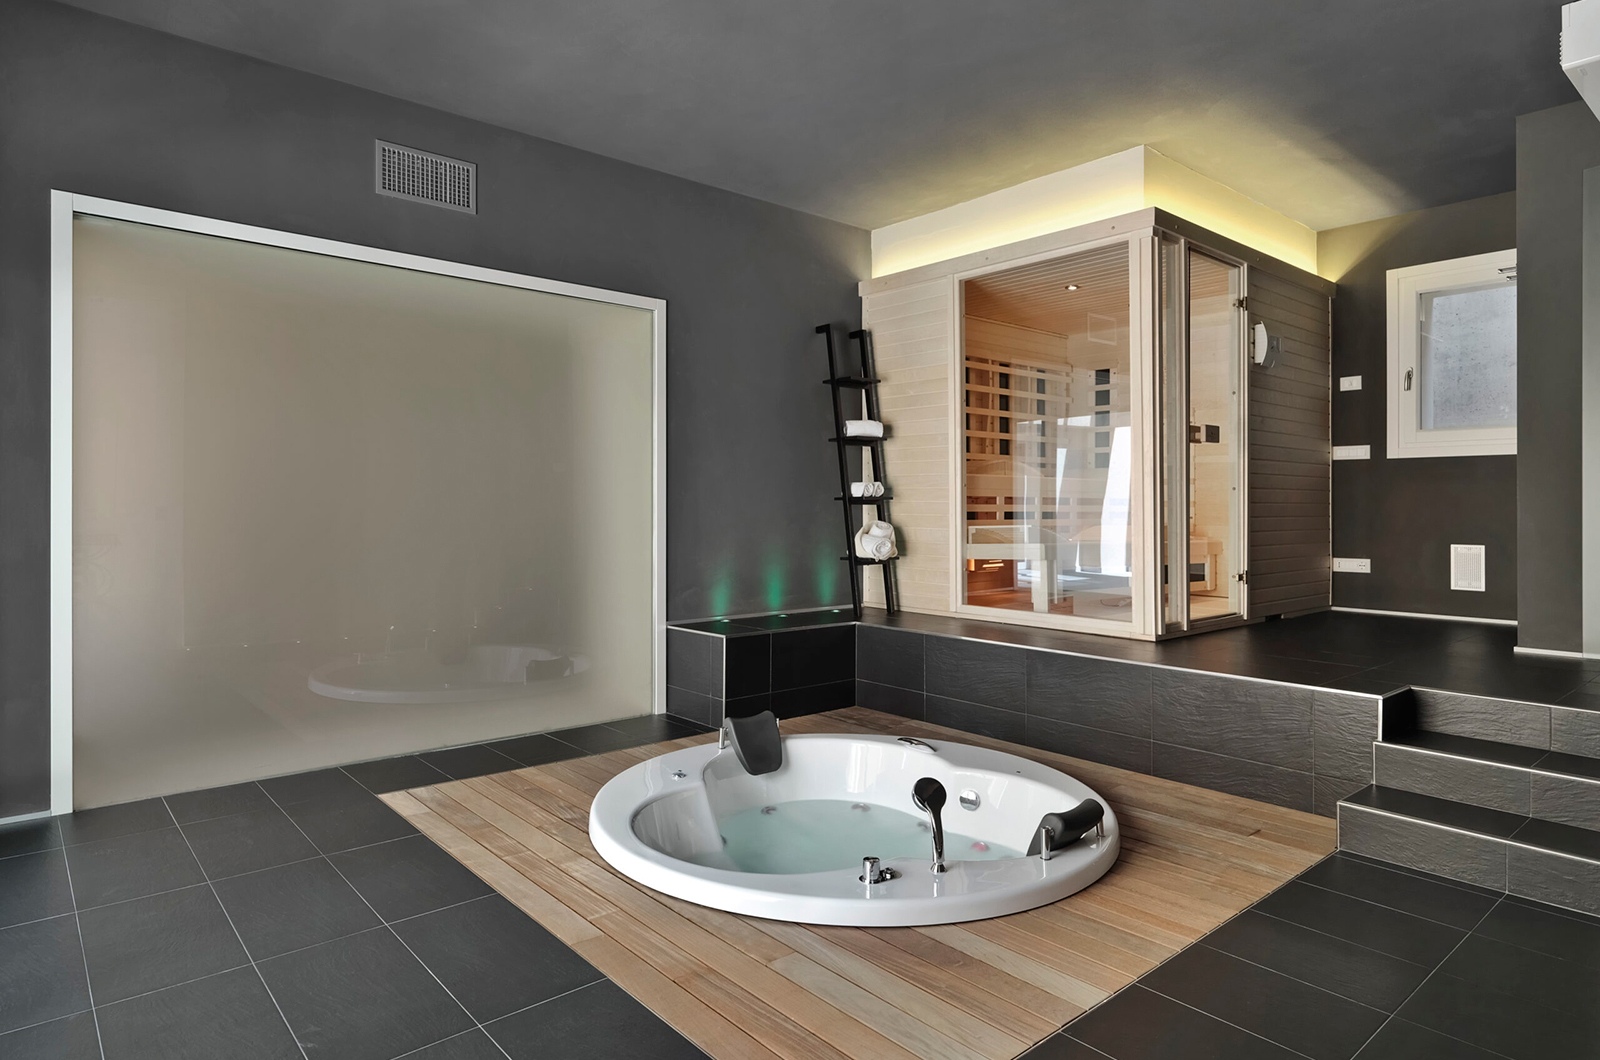 interiors-of-a-modern-bathroom-2021-09-01-21-09-58-utc-bath02